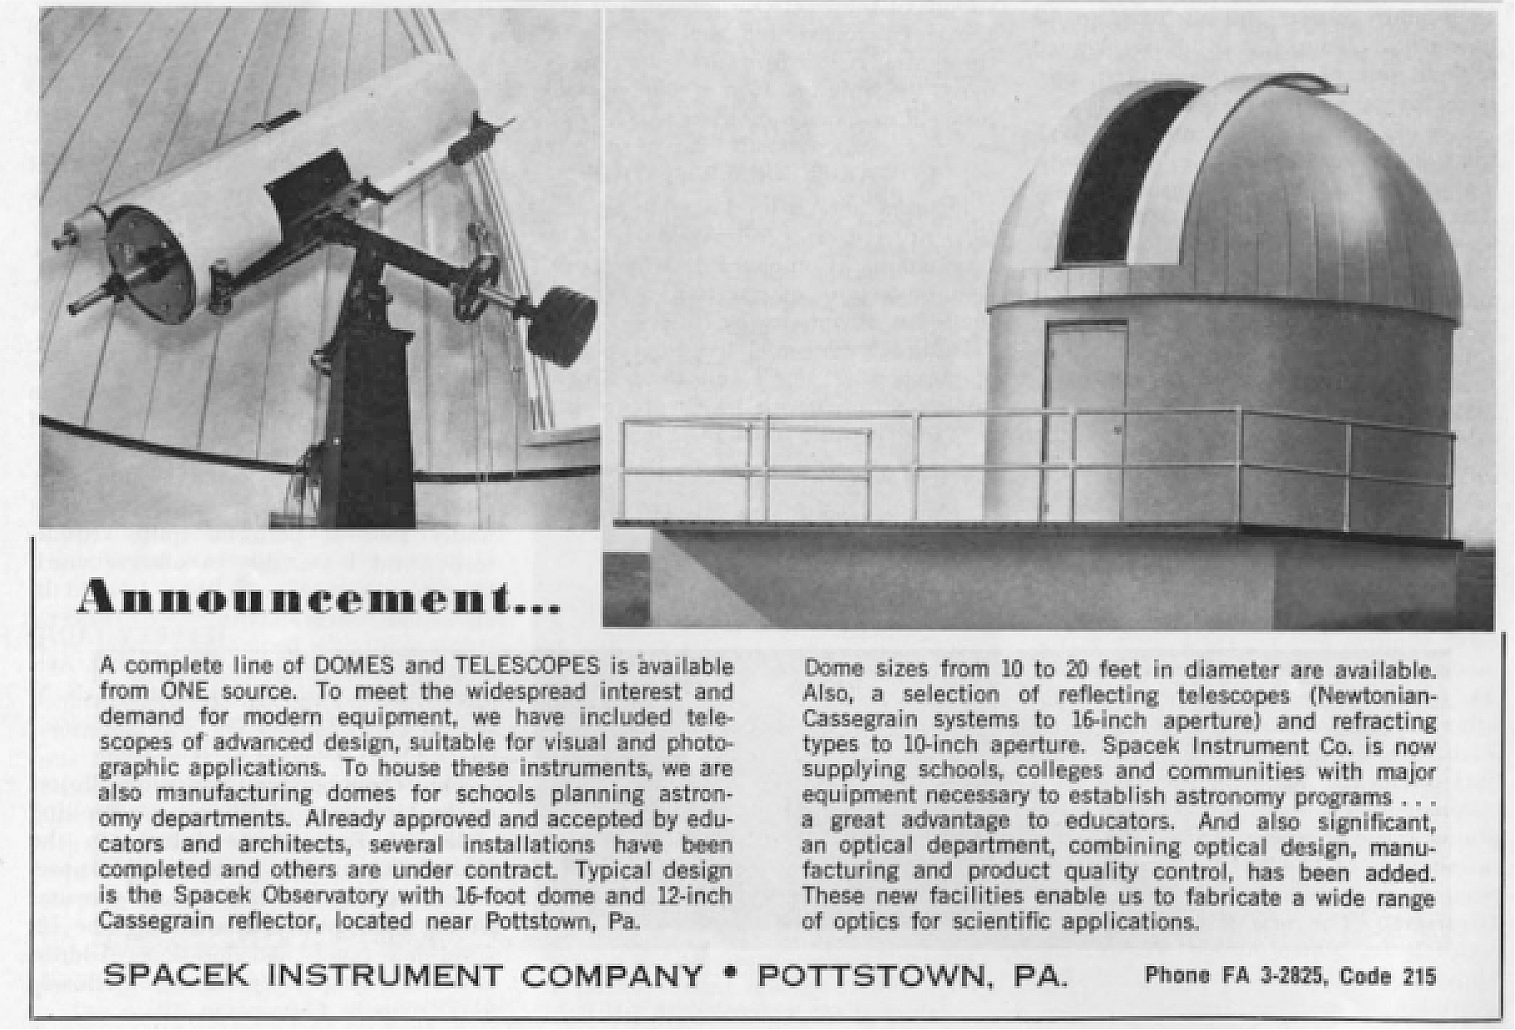 Spacek Instrument Company advertisement